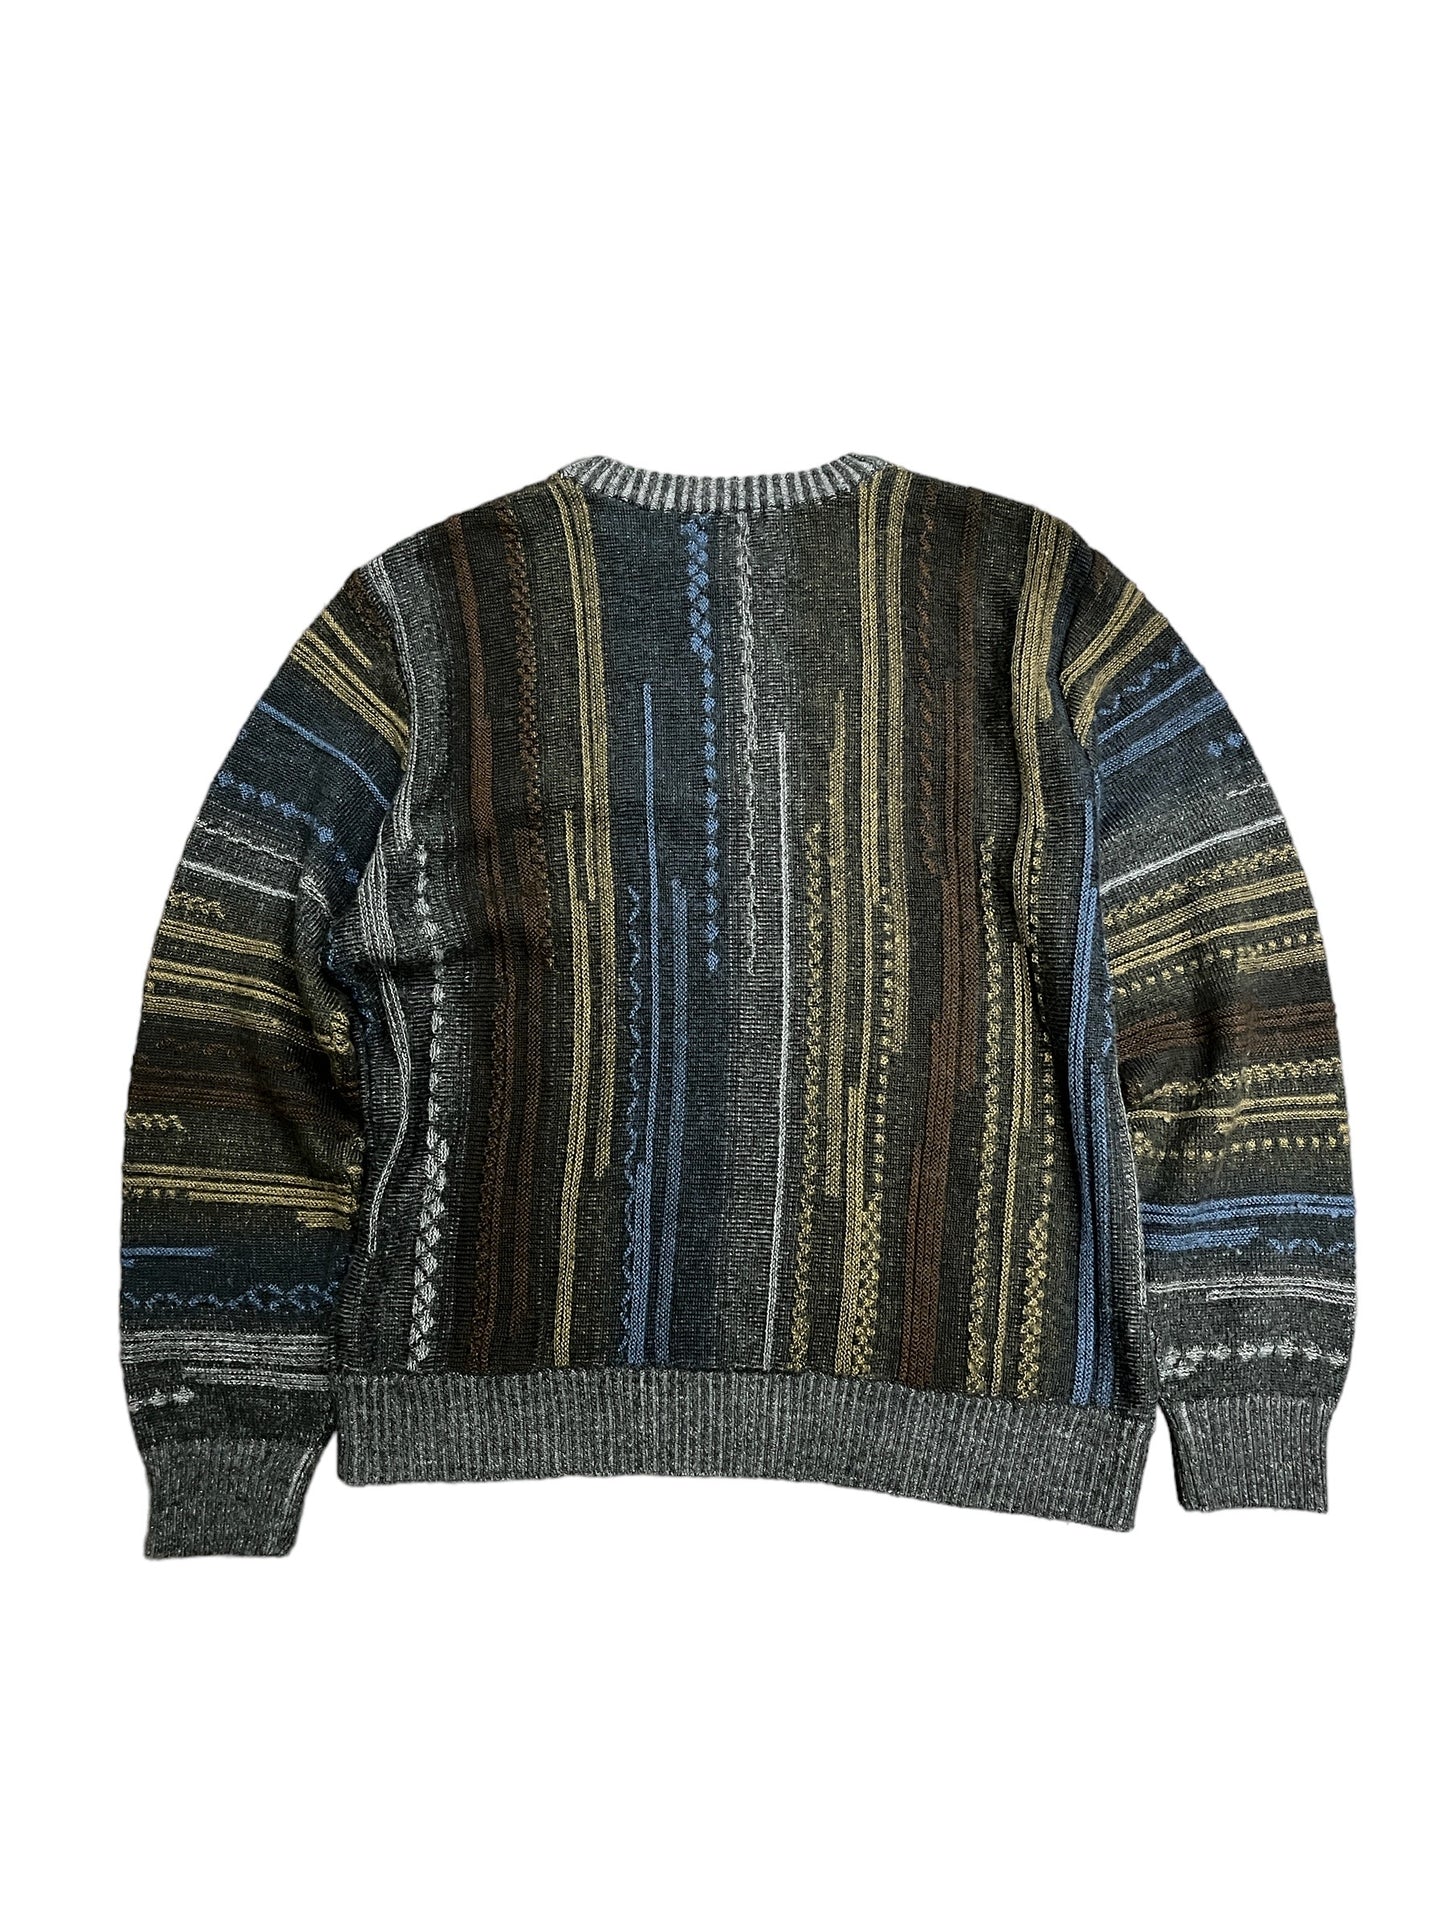 Vintage "Pronto Uomo" Knit Sweater